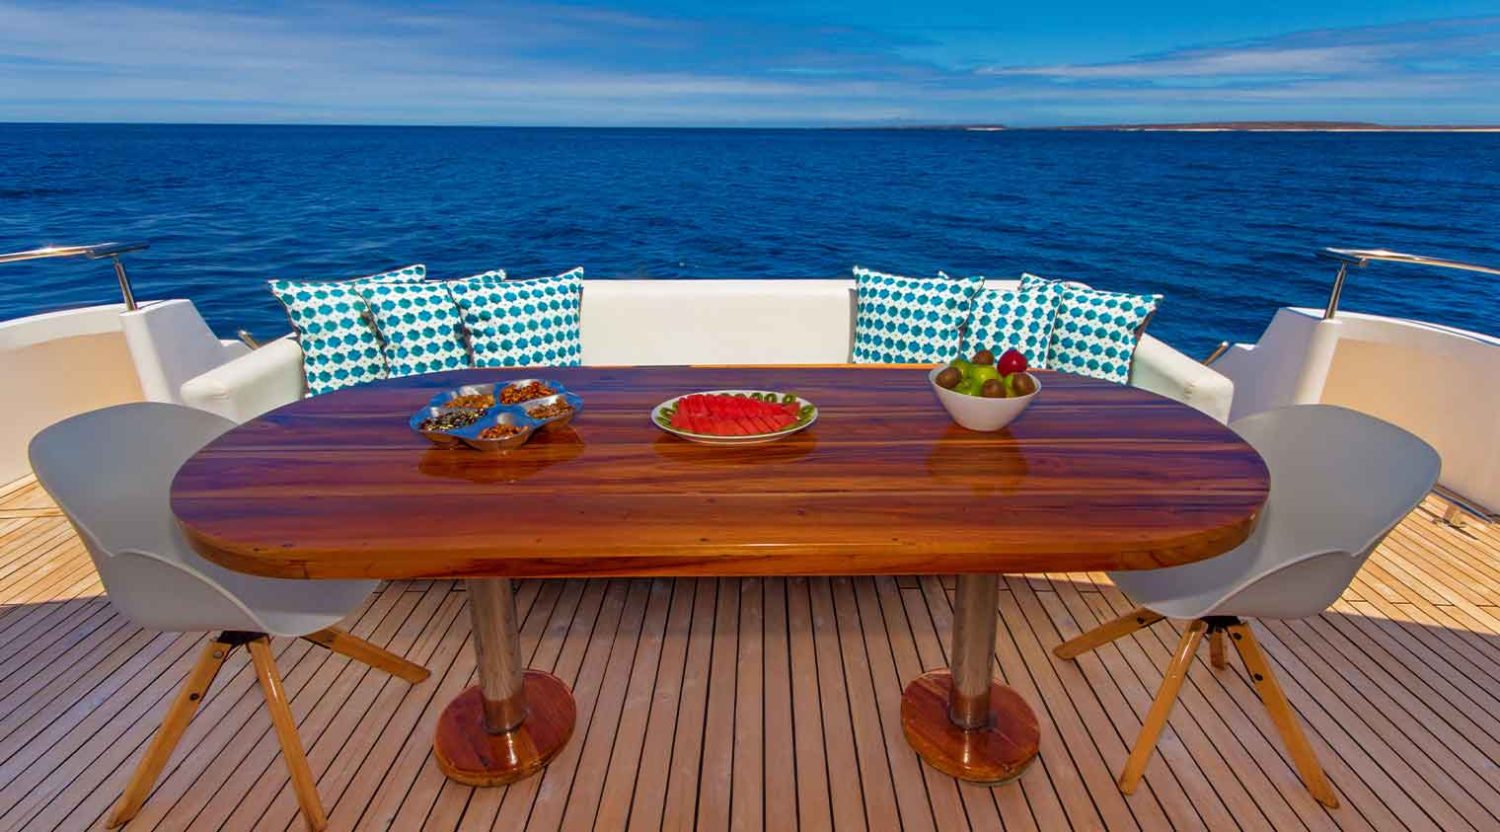 grand majestic galapagos yacht deck of galapagos islands tours